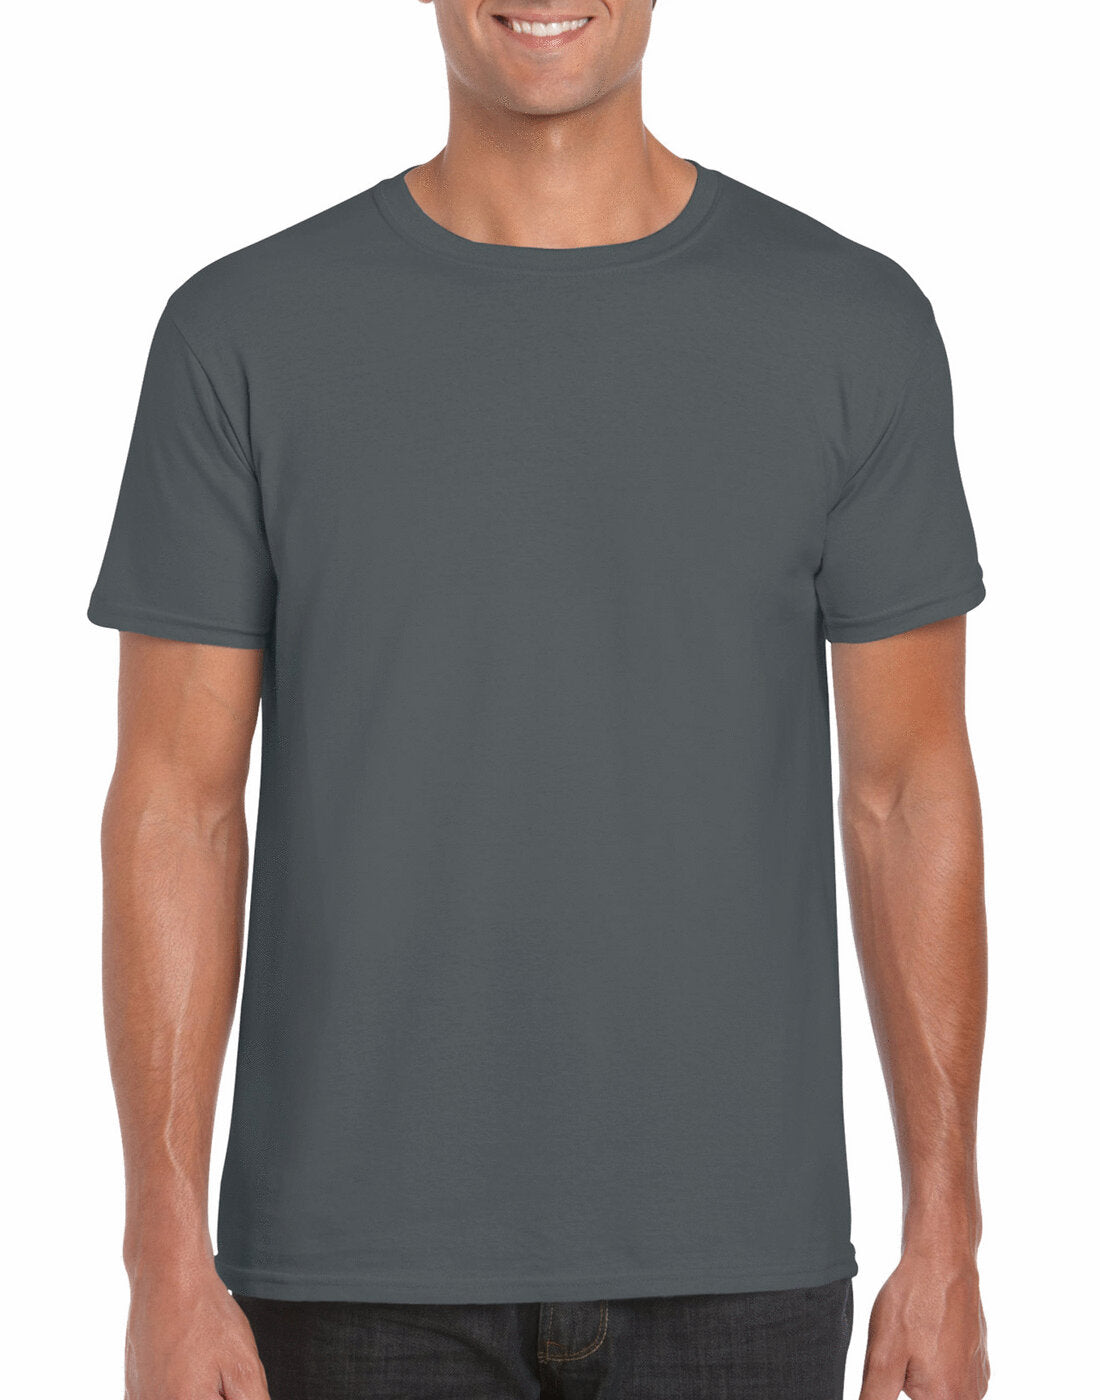 Gildan Adult Softstyle Ringspun T-Shirt - GD01 - Charcoal